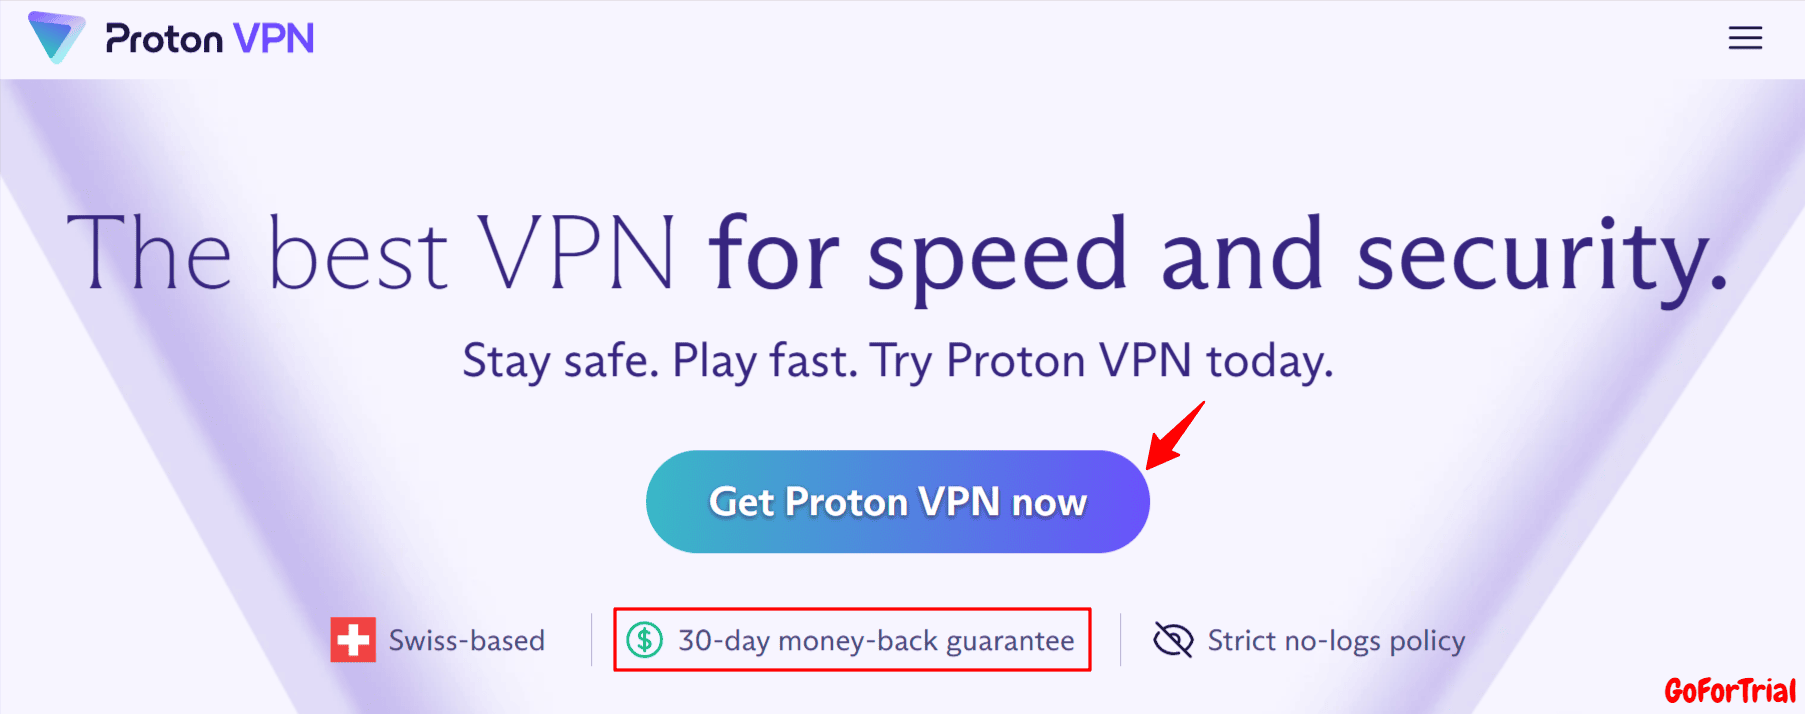 Proton VPN Free Trial Options